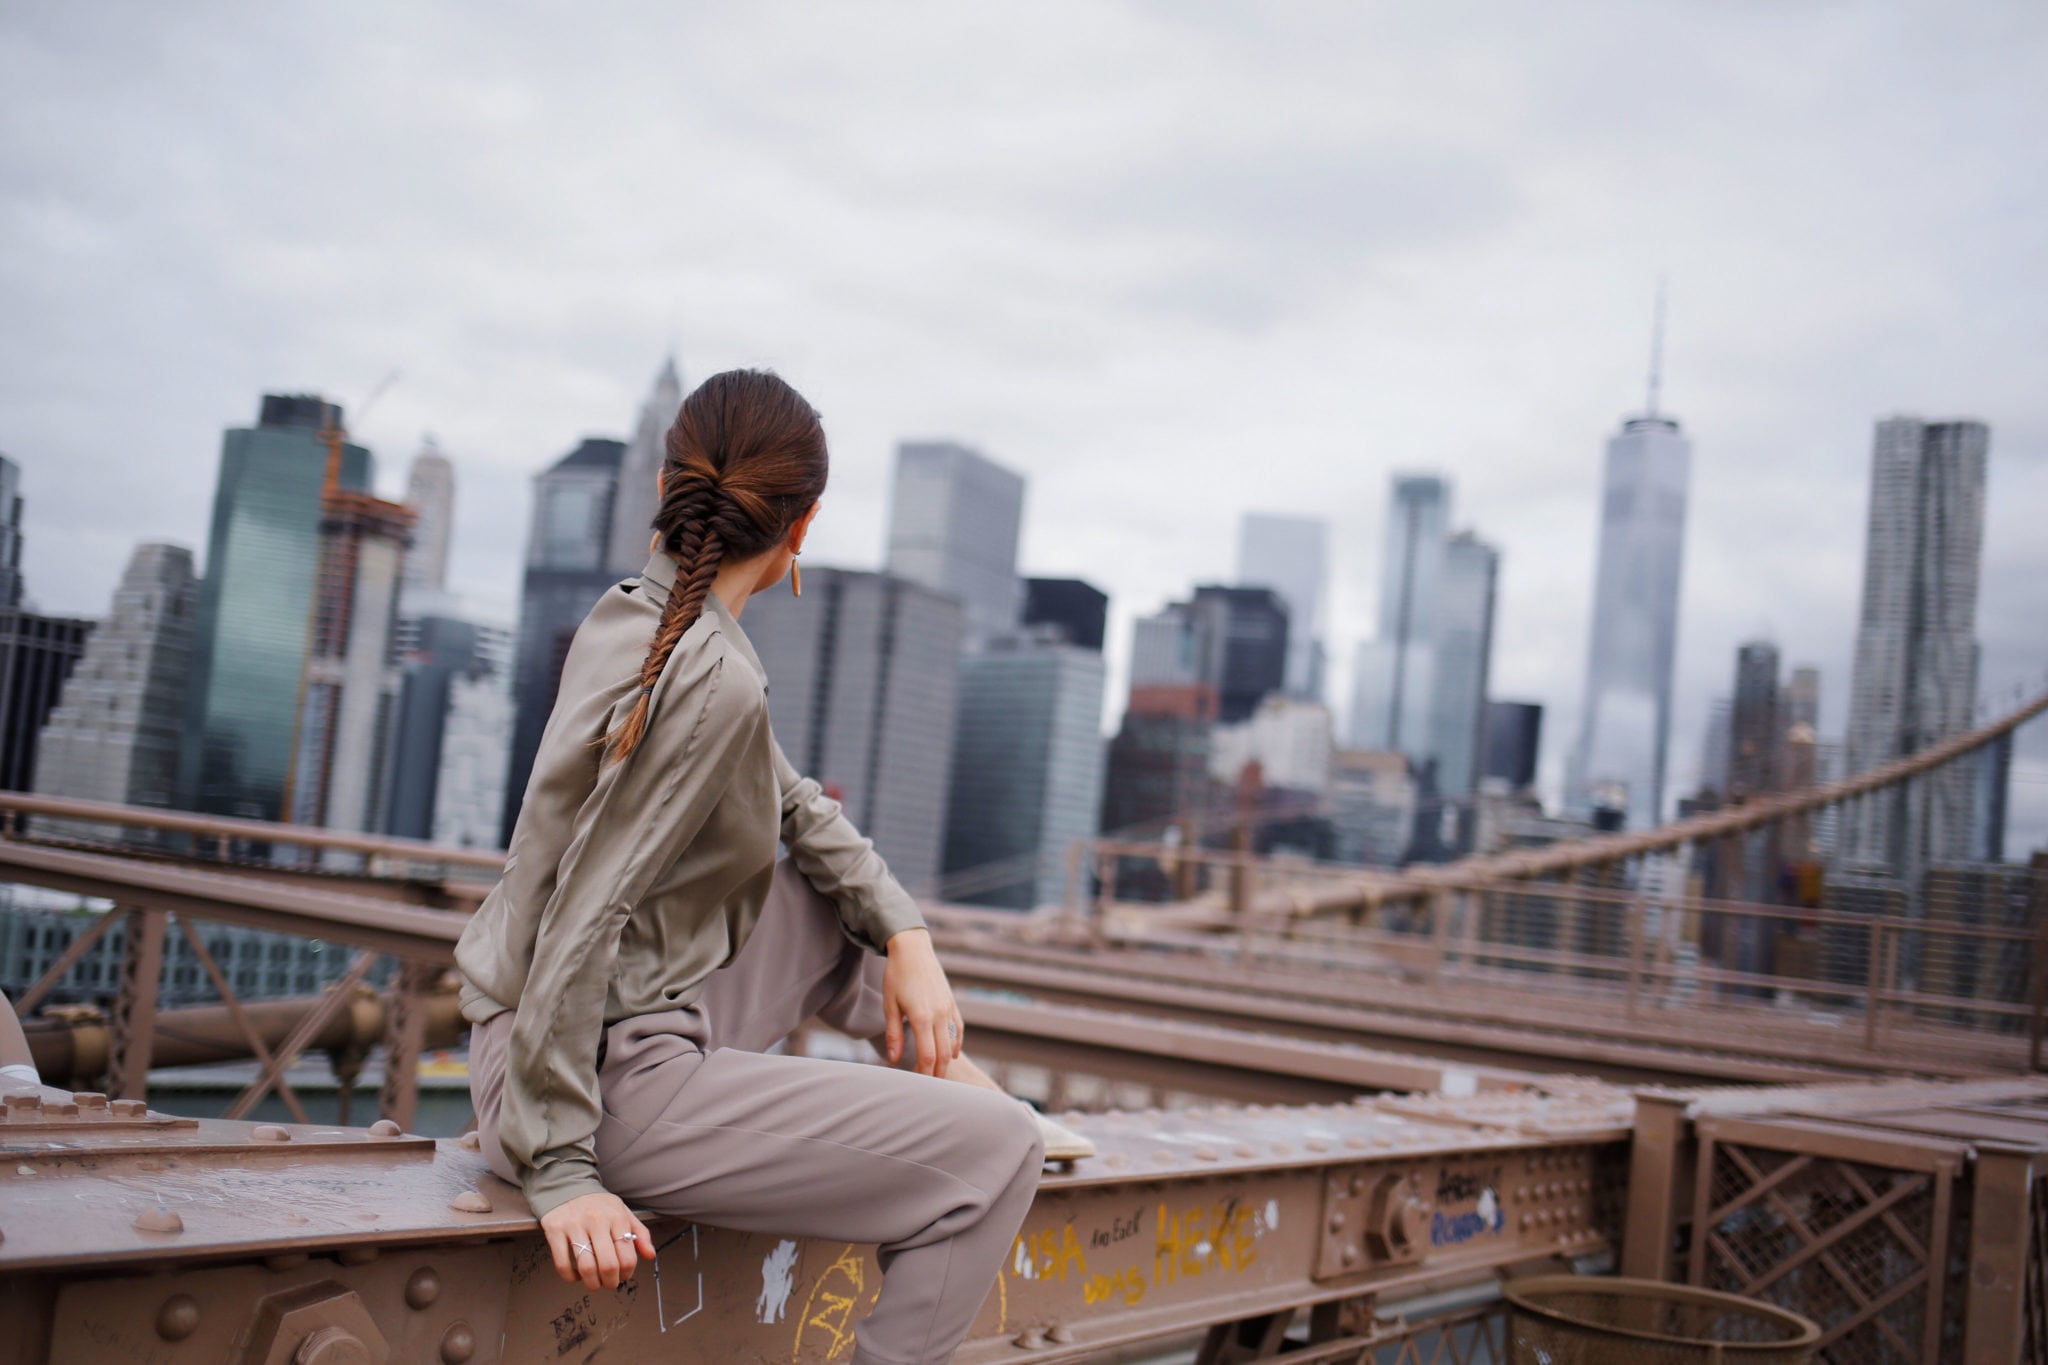 Bogdar Army Effortless Chic Outfit - Shot in New York - Brooklyn Bridge - Featuring Fashion Blogger Julia Comil